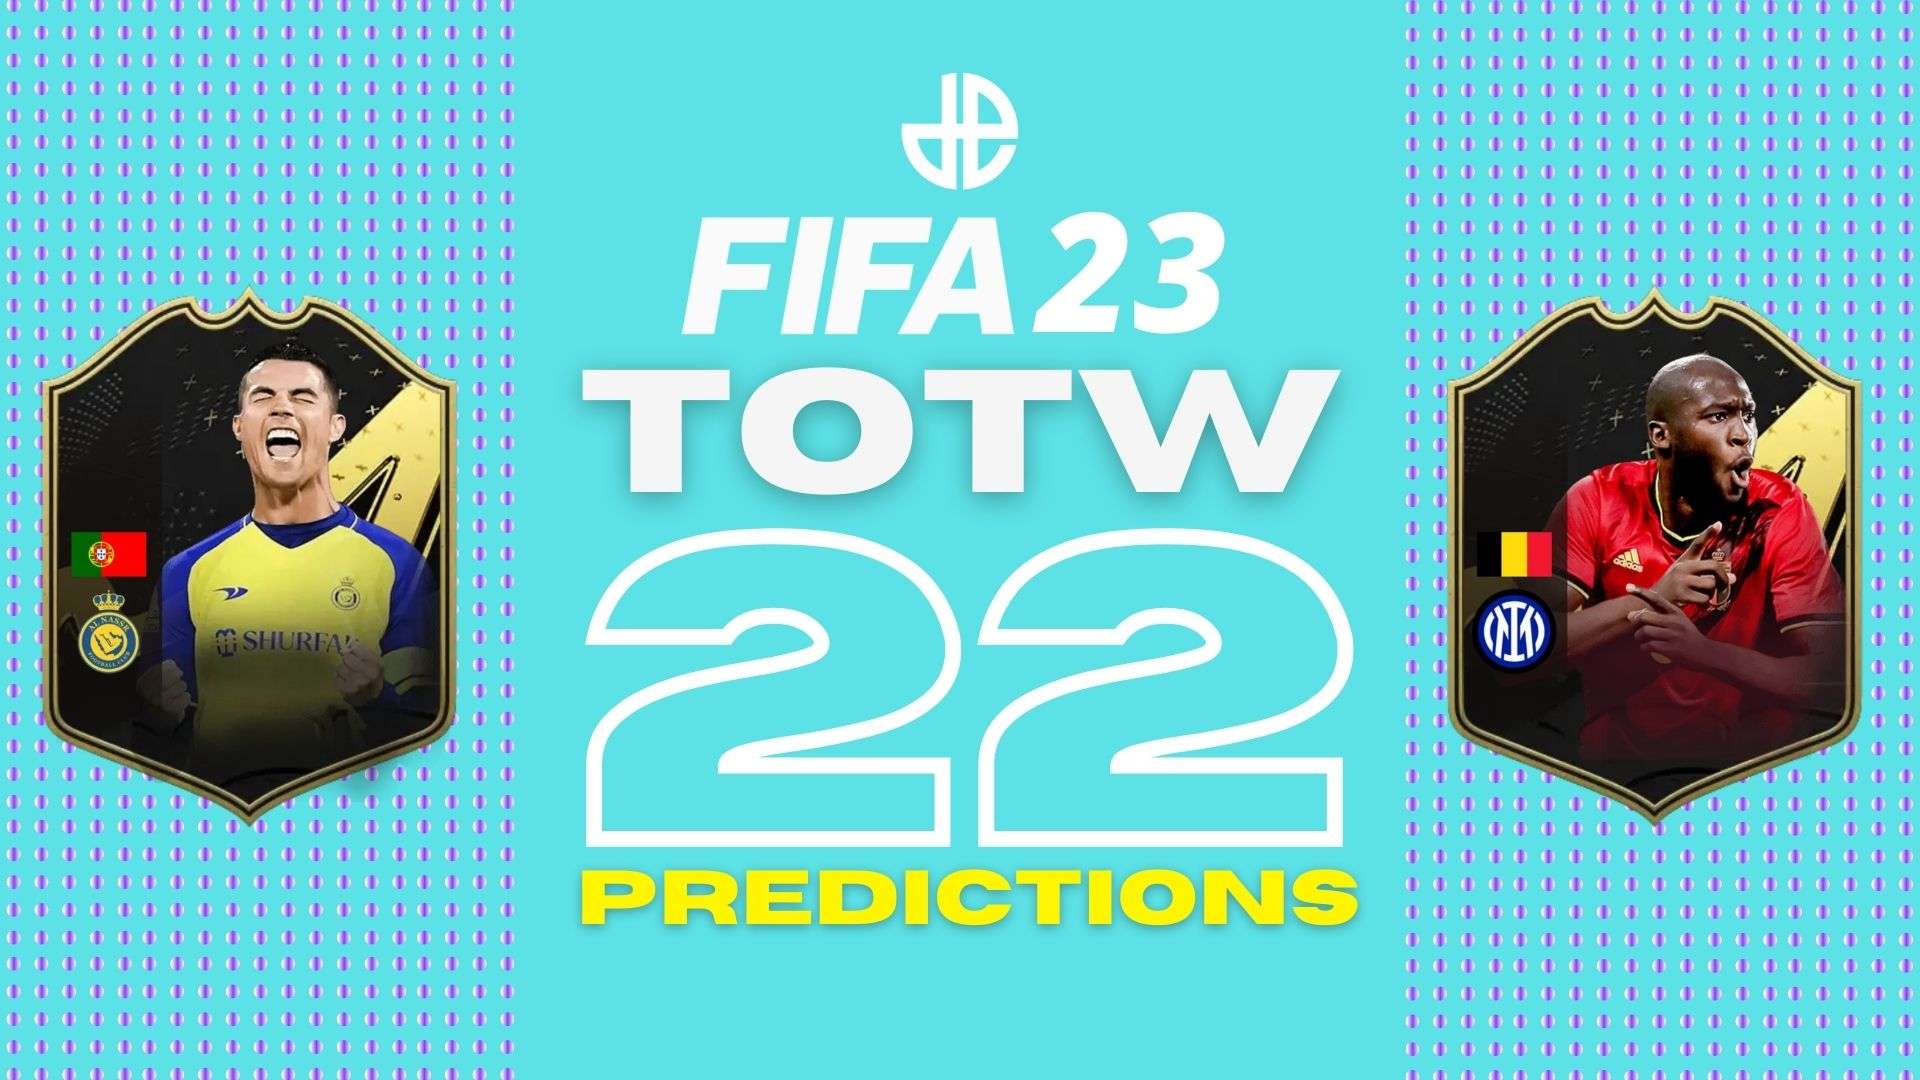 FIFA 23 TOTW 22 prediction cards with Lukaku and Ronaldo